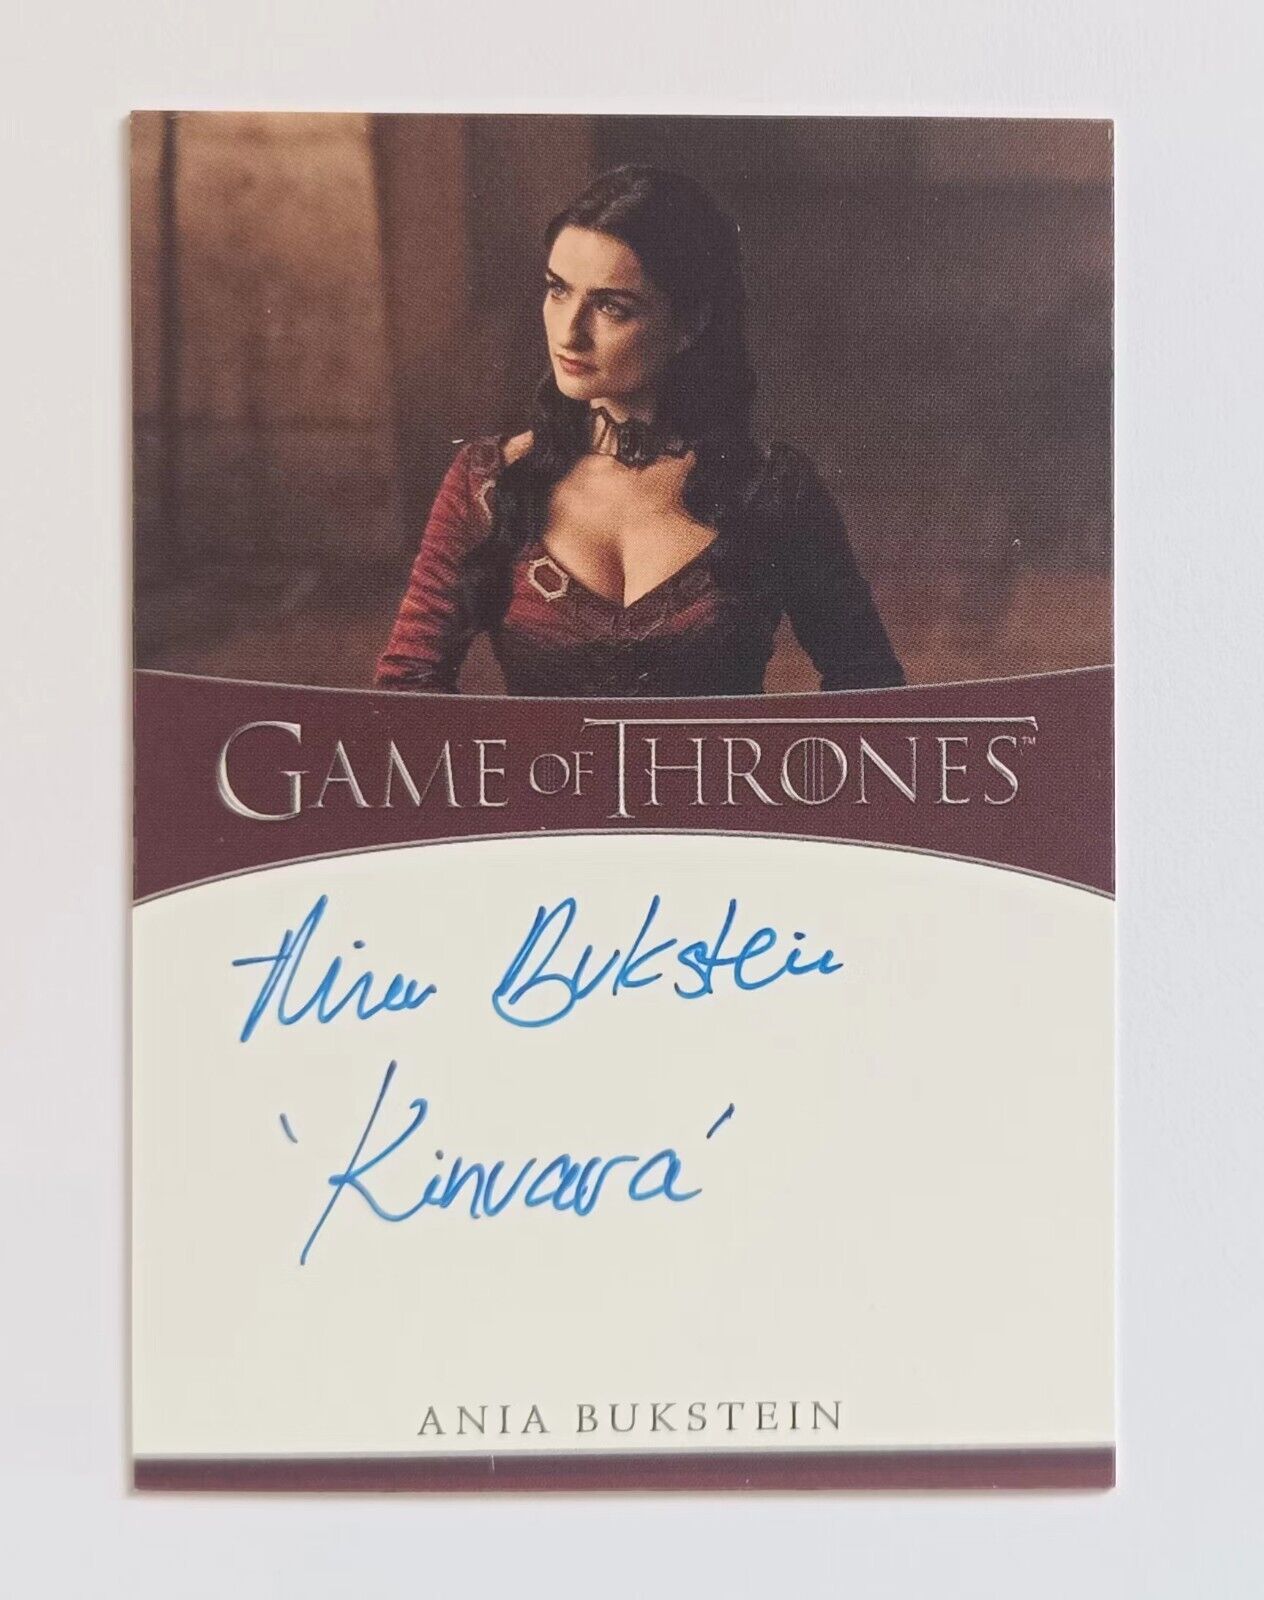 Game of Thrones ANIA BUKSTEIN  Autograph  INSCRIPTION Auto  Kinvara